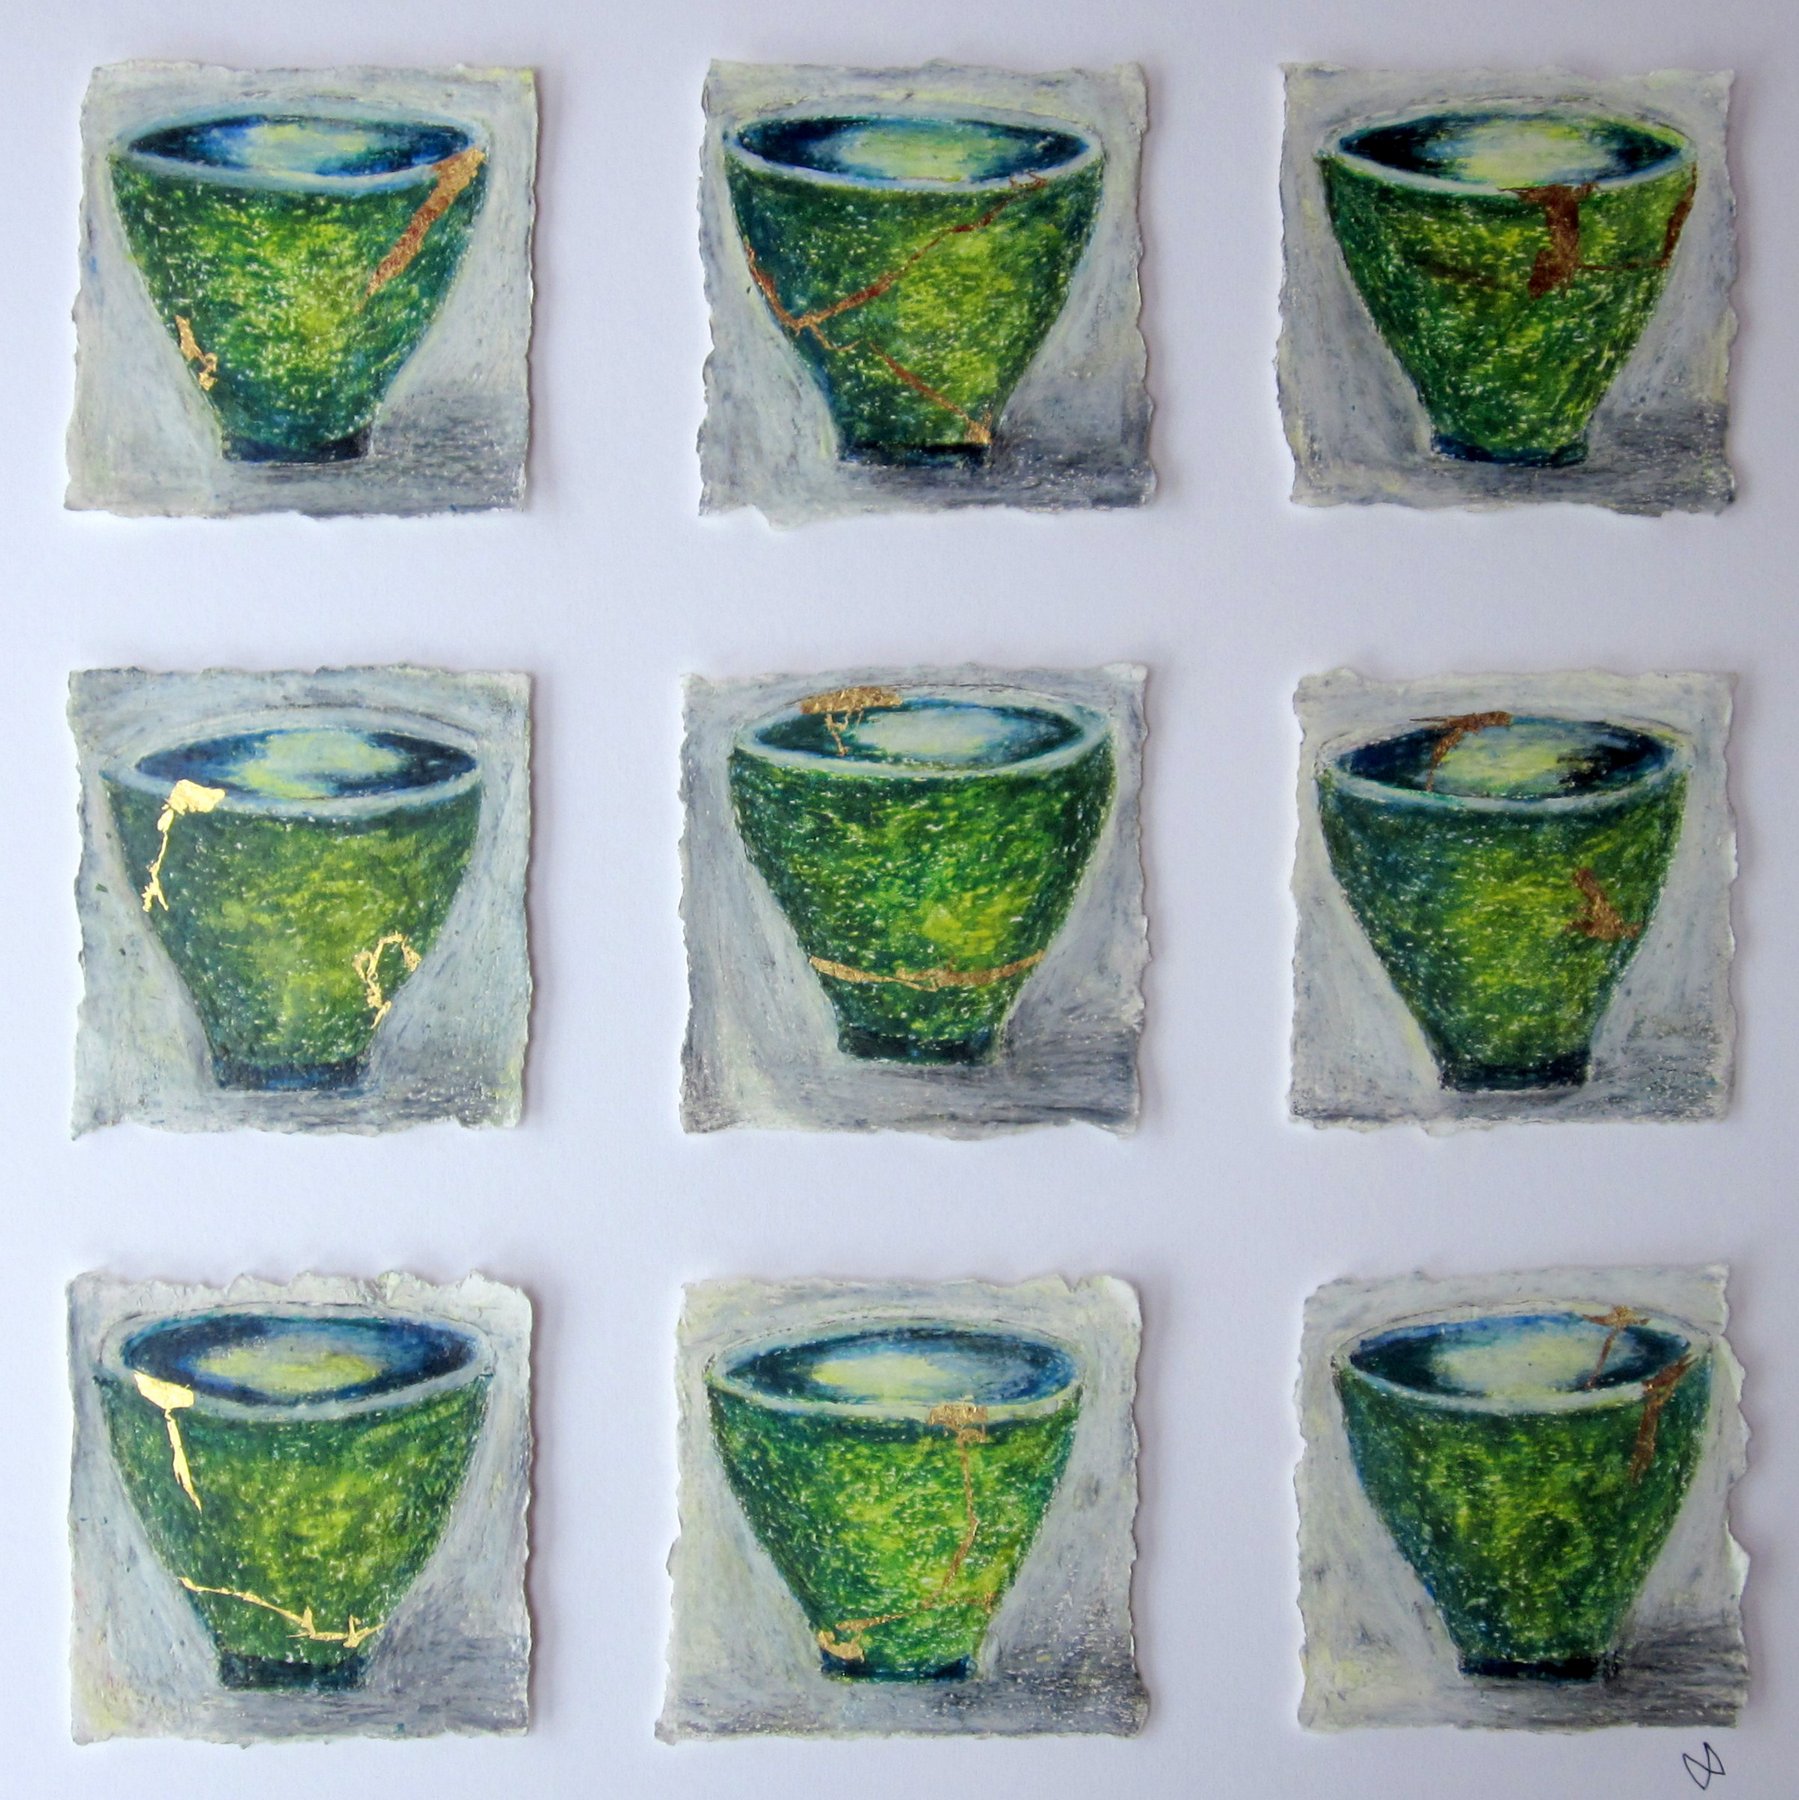 Nine green kintsugi tea bowls with gold repair